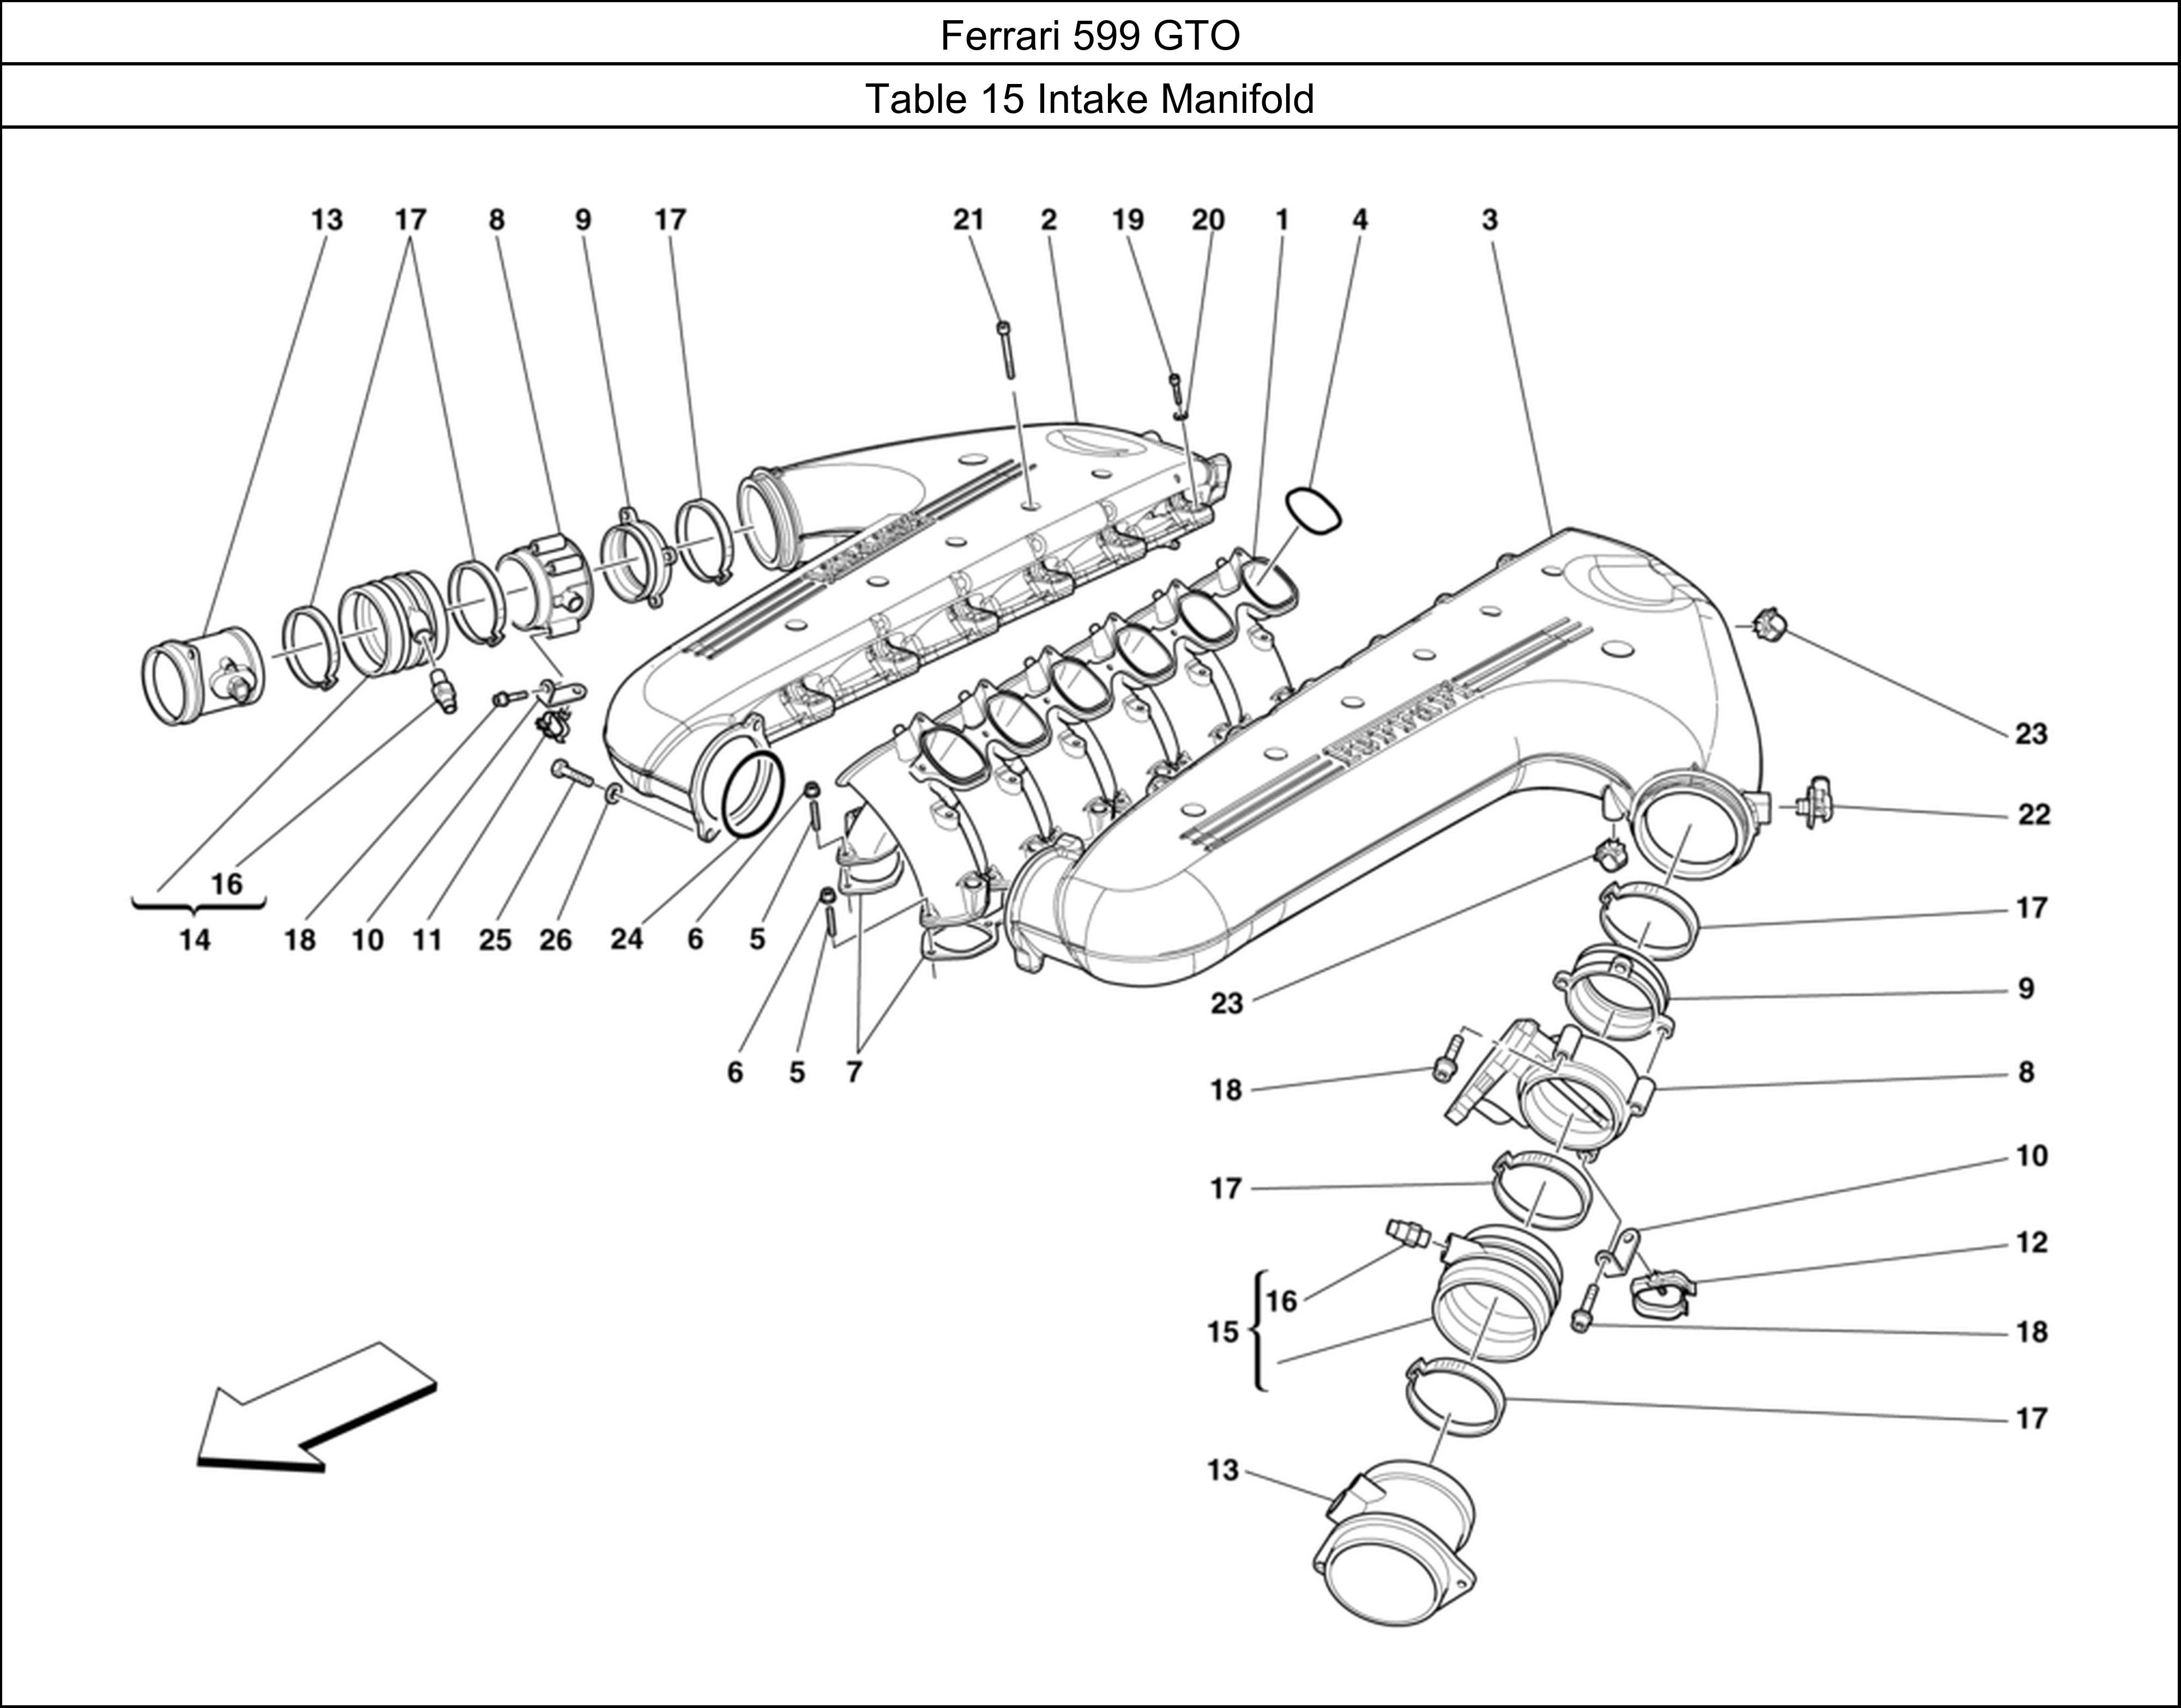 Ferrari Parts Ferrari 599 GTO Table 15 Intake Manifold